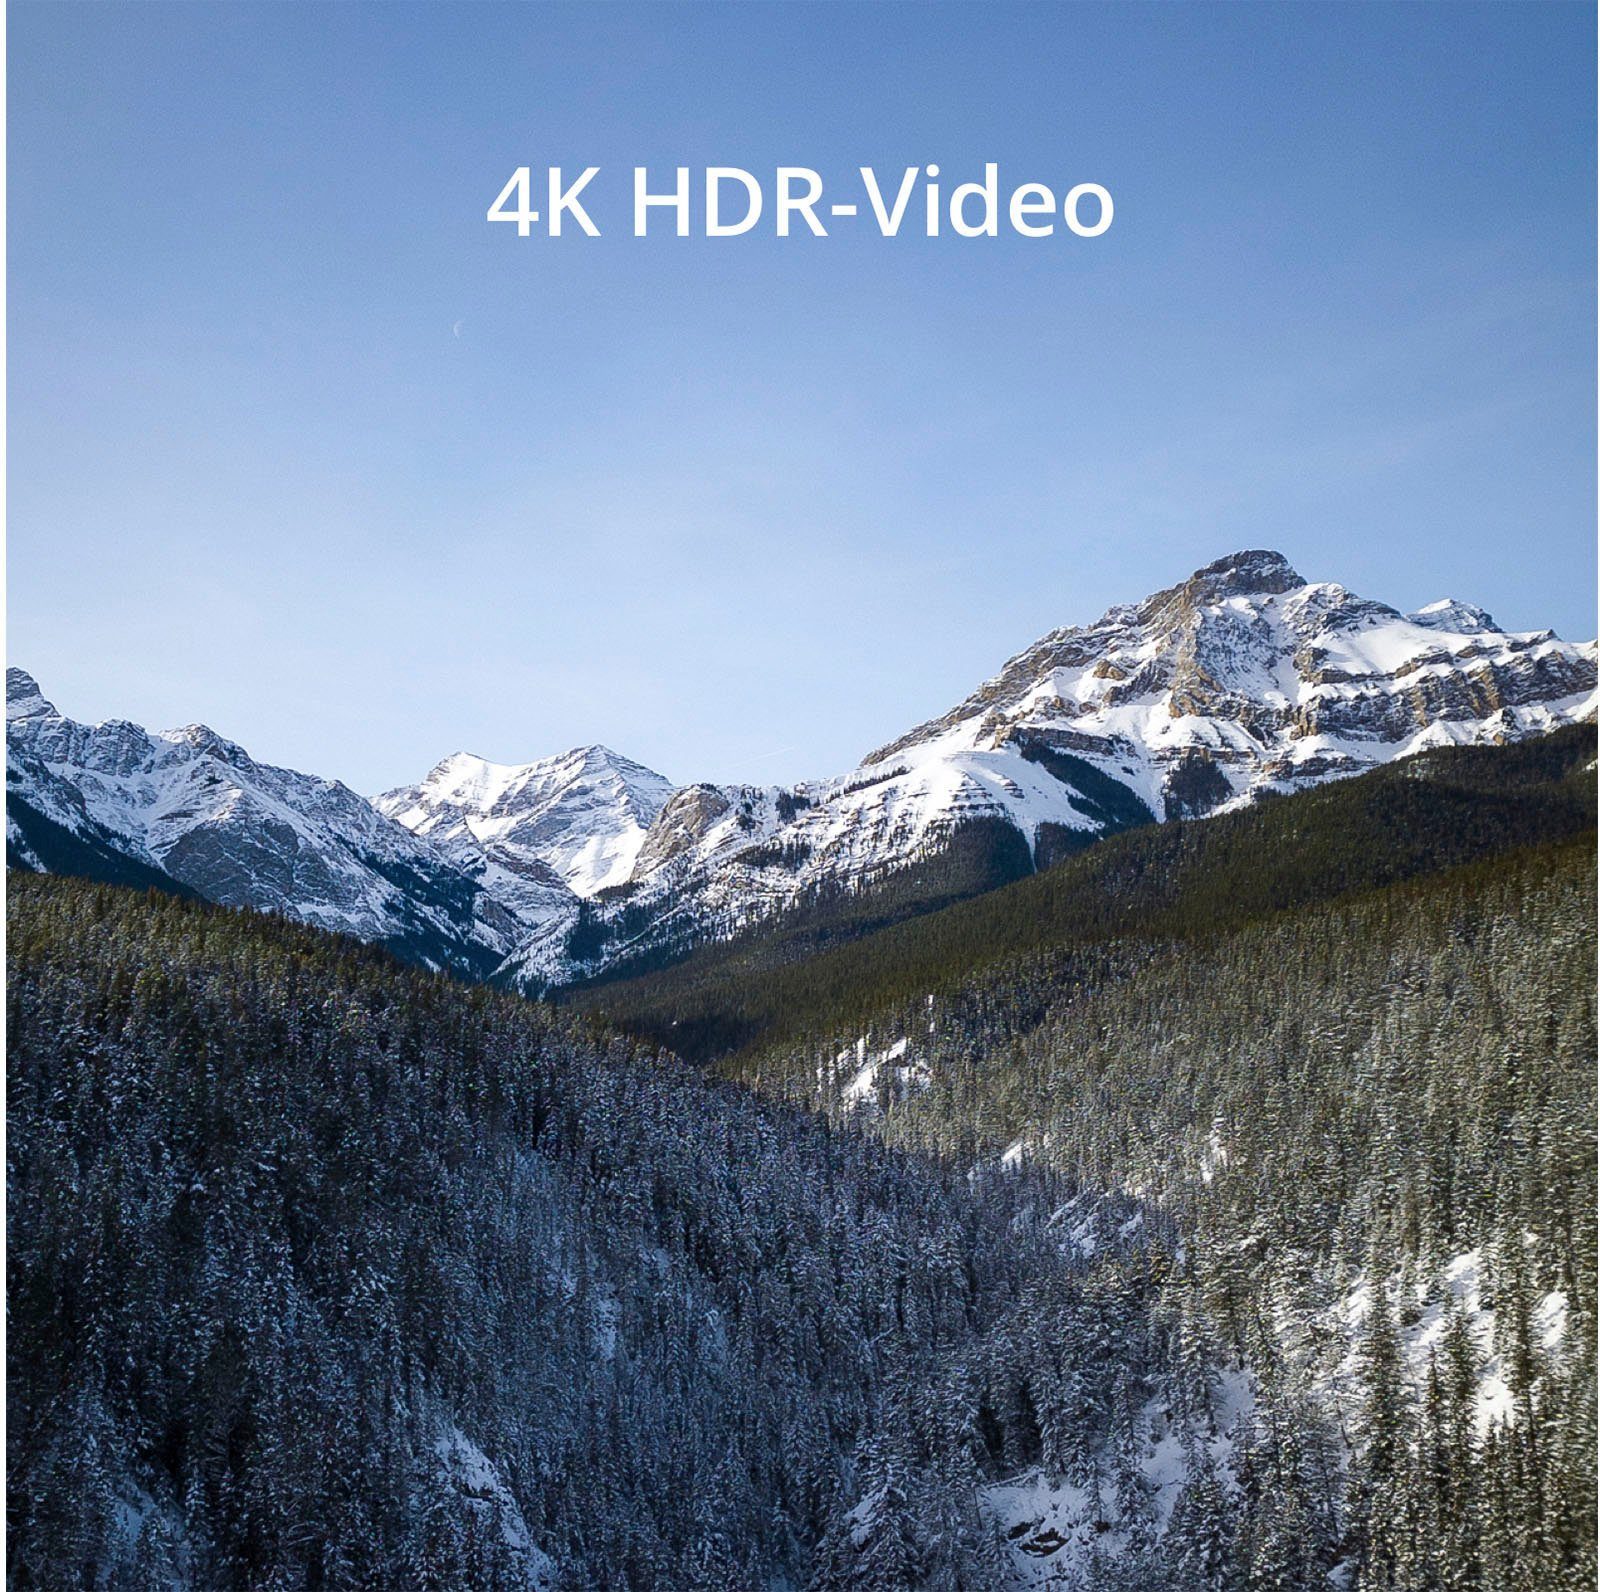 HD) 3 DJI Mini RC (4K Drohne Ultra DJI &